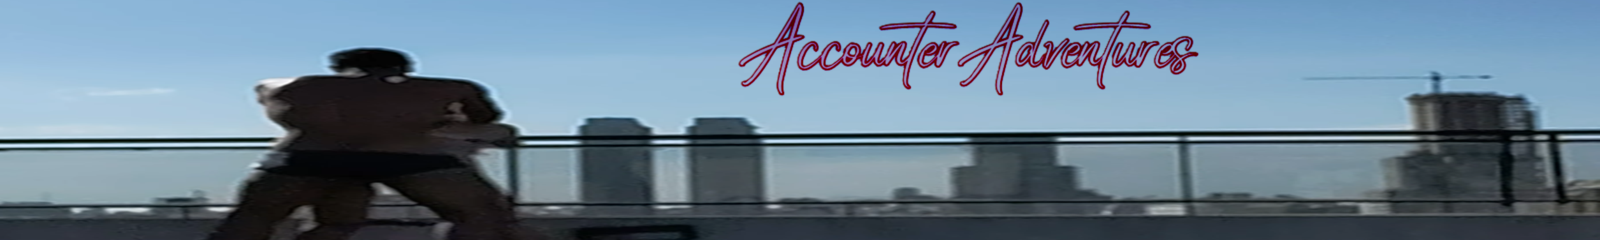 Accounter adventures